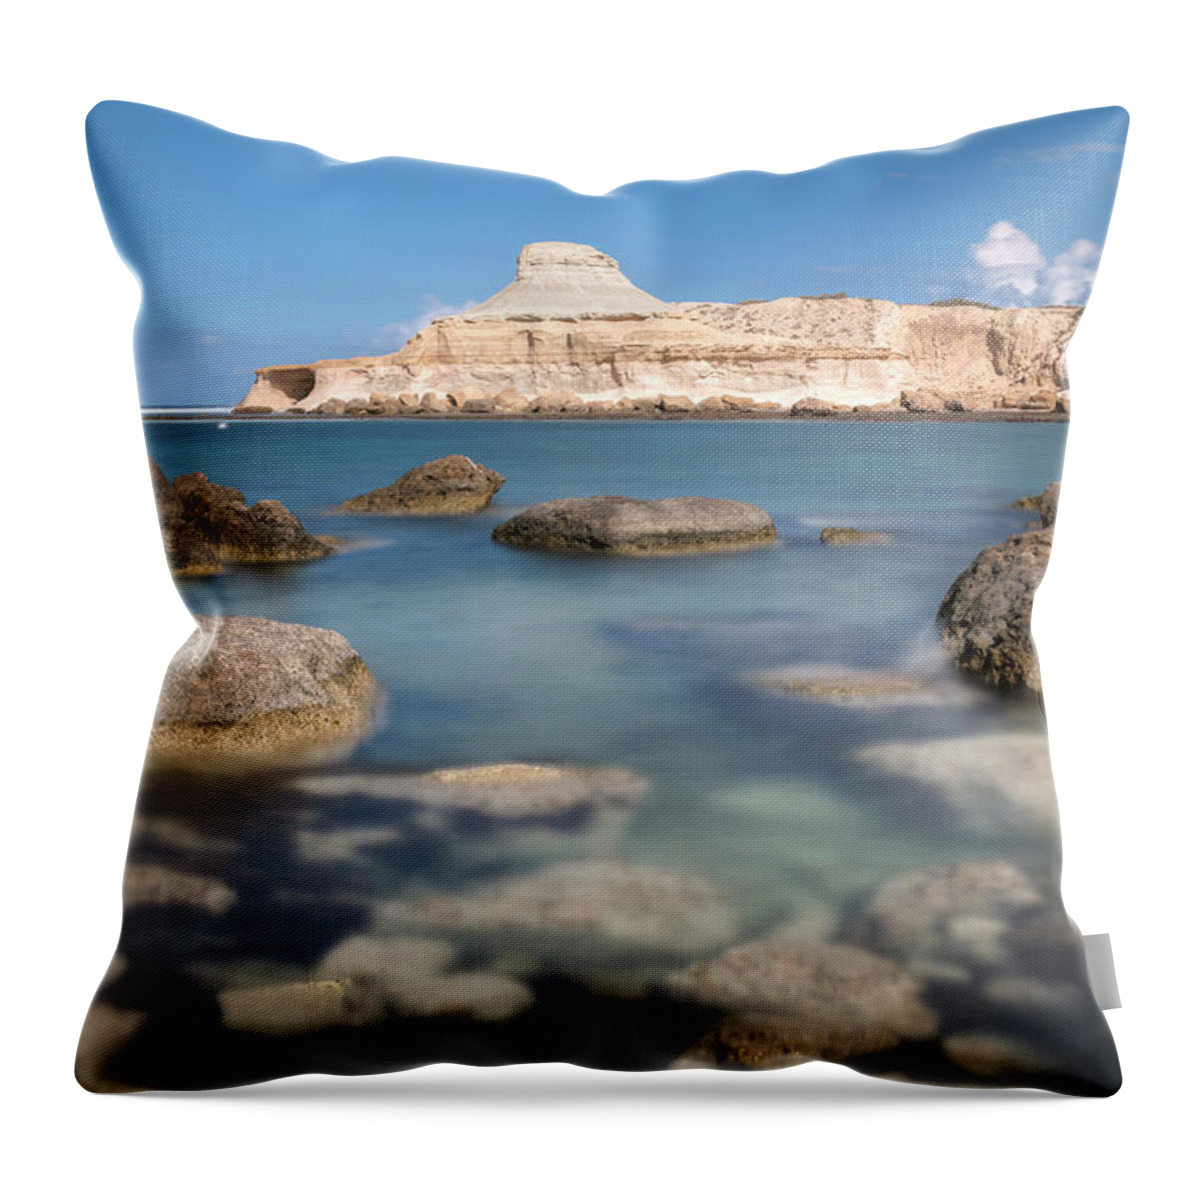 Xwejni Bay Throw Pillow featuring the photograph Xwejni Bay - Gozo #1 by Joana Kruse